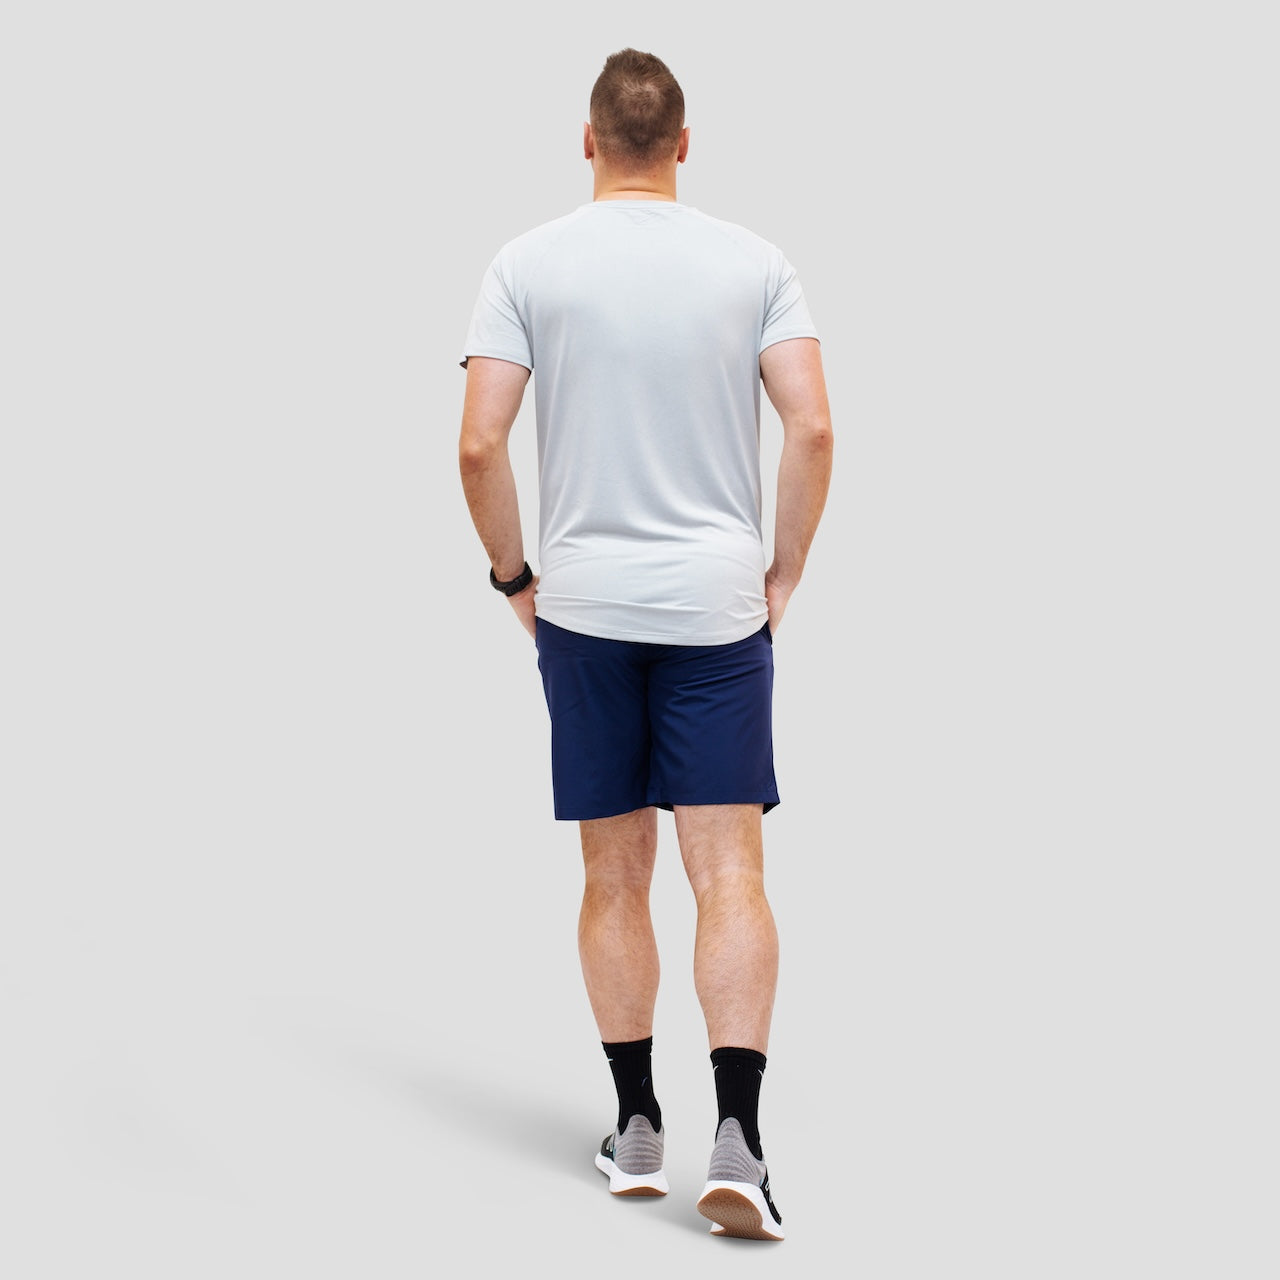 Navy Athletic Shorts for Tall Slim Men